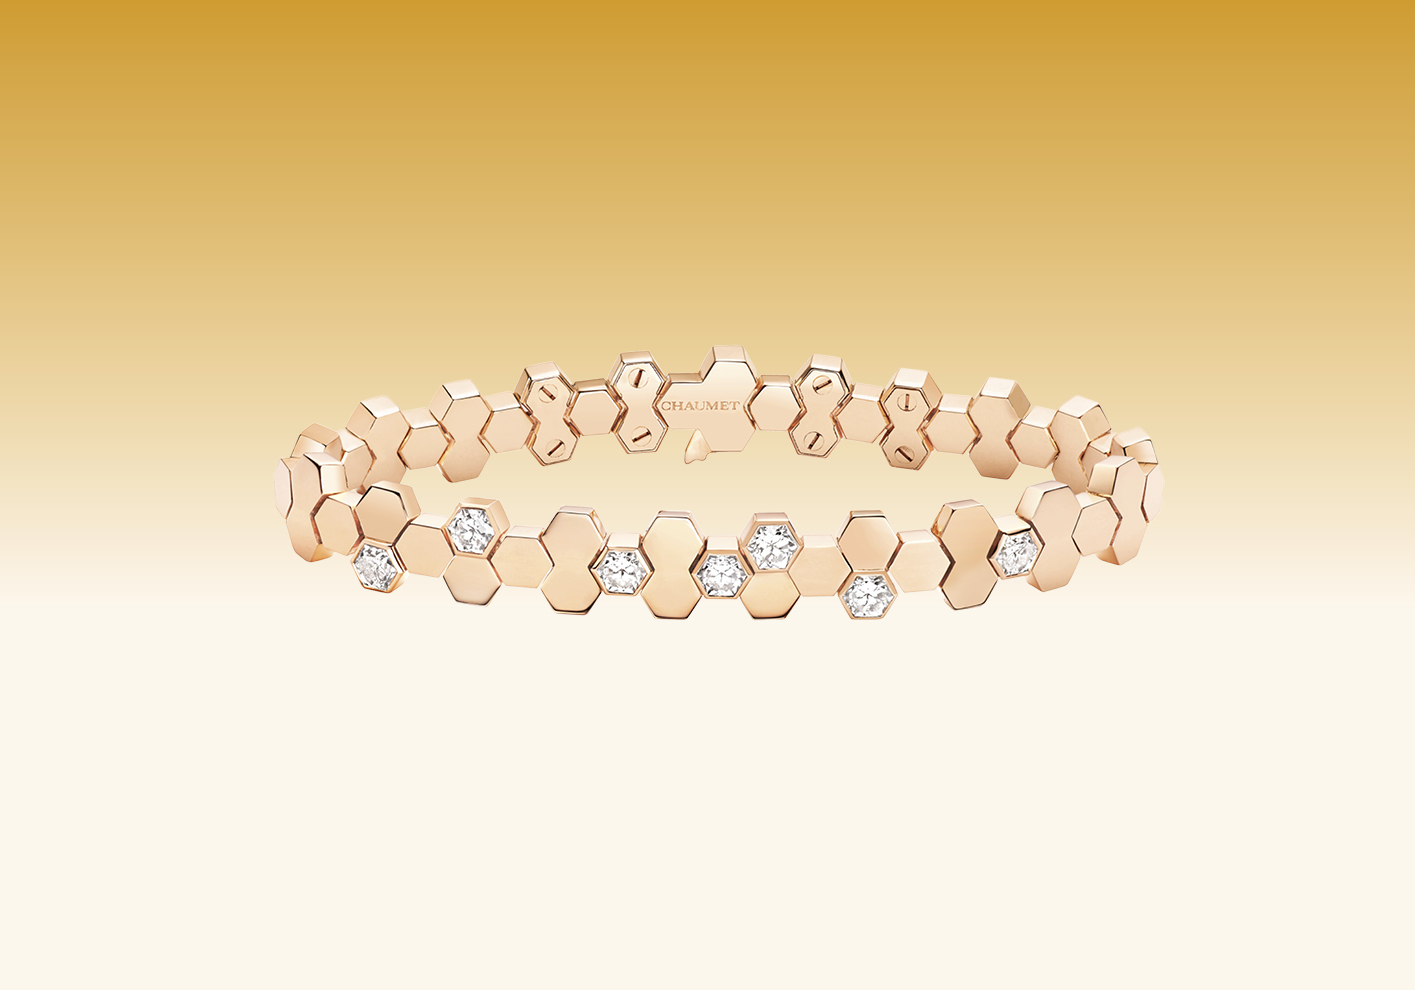 Chaumet rose gold and diamond bracelet, £26,600